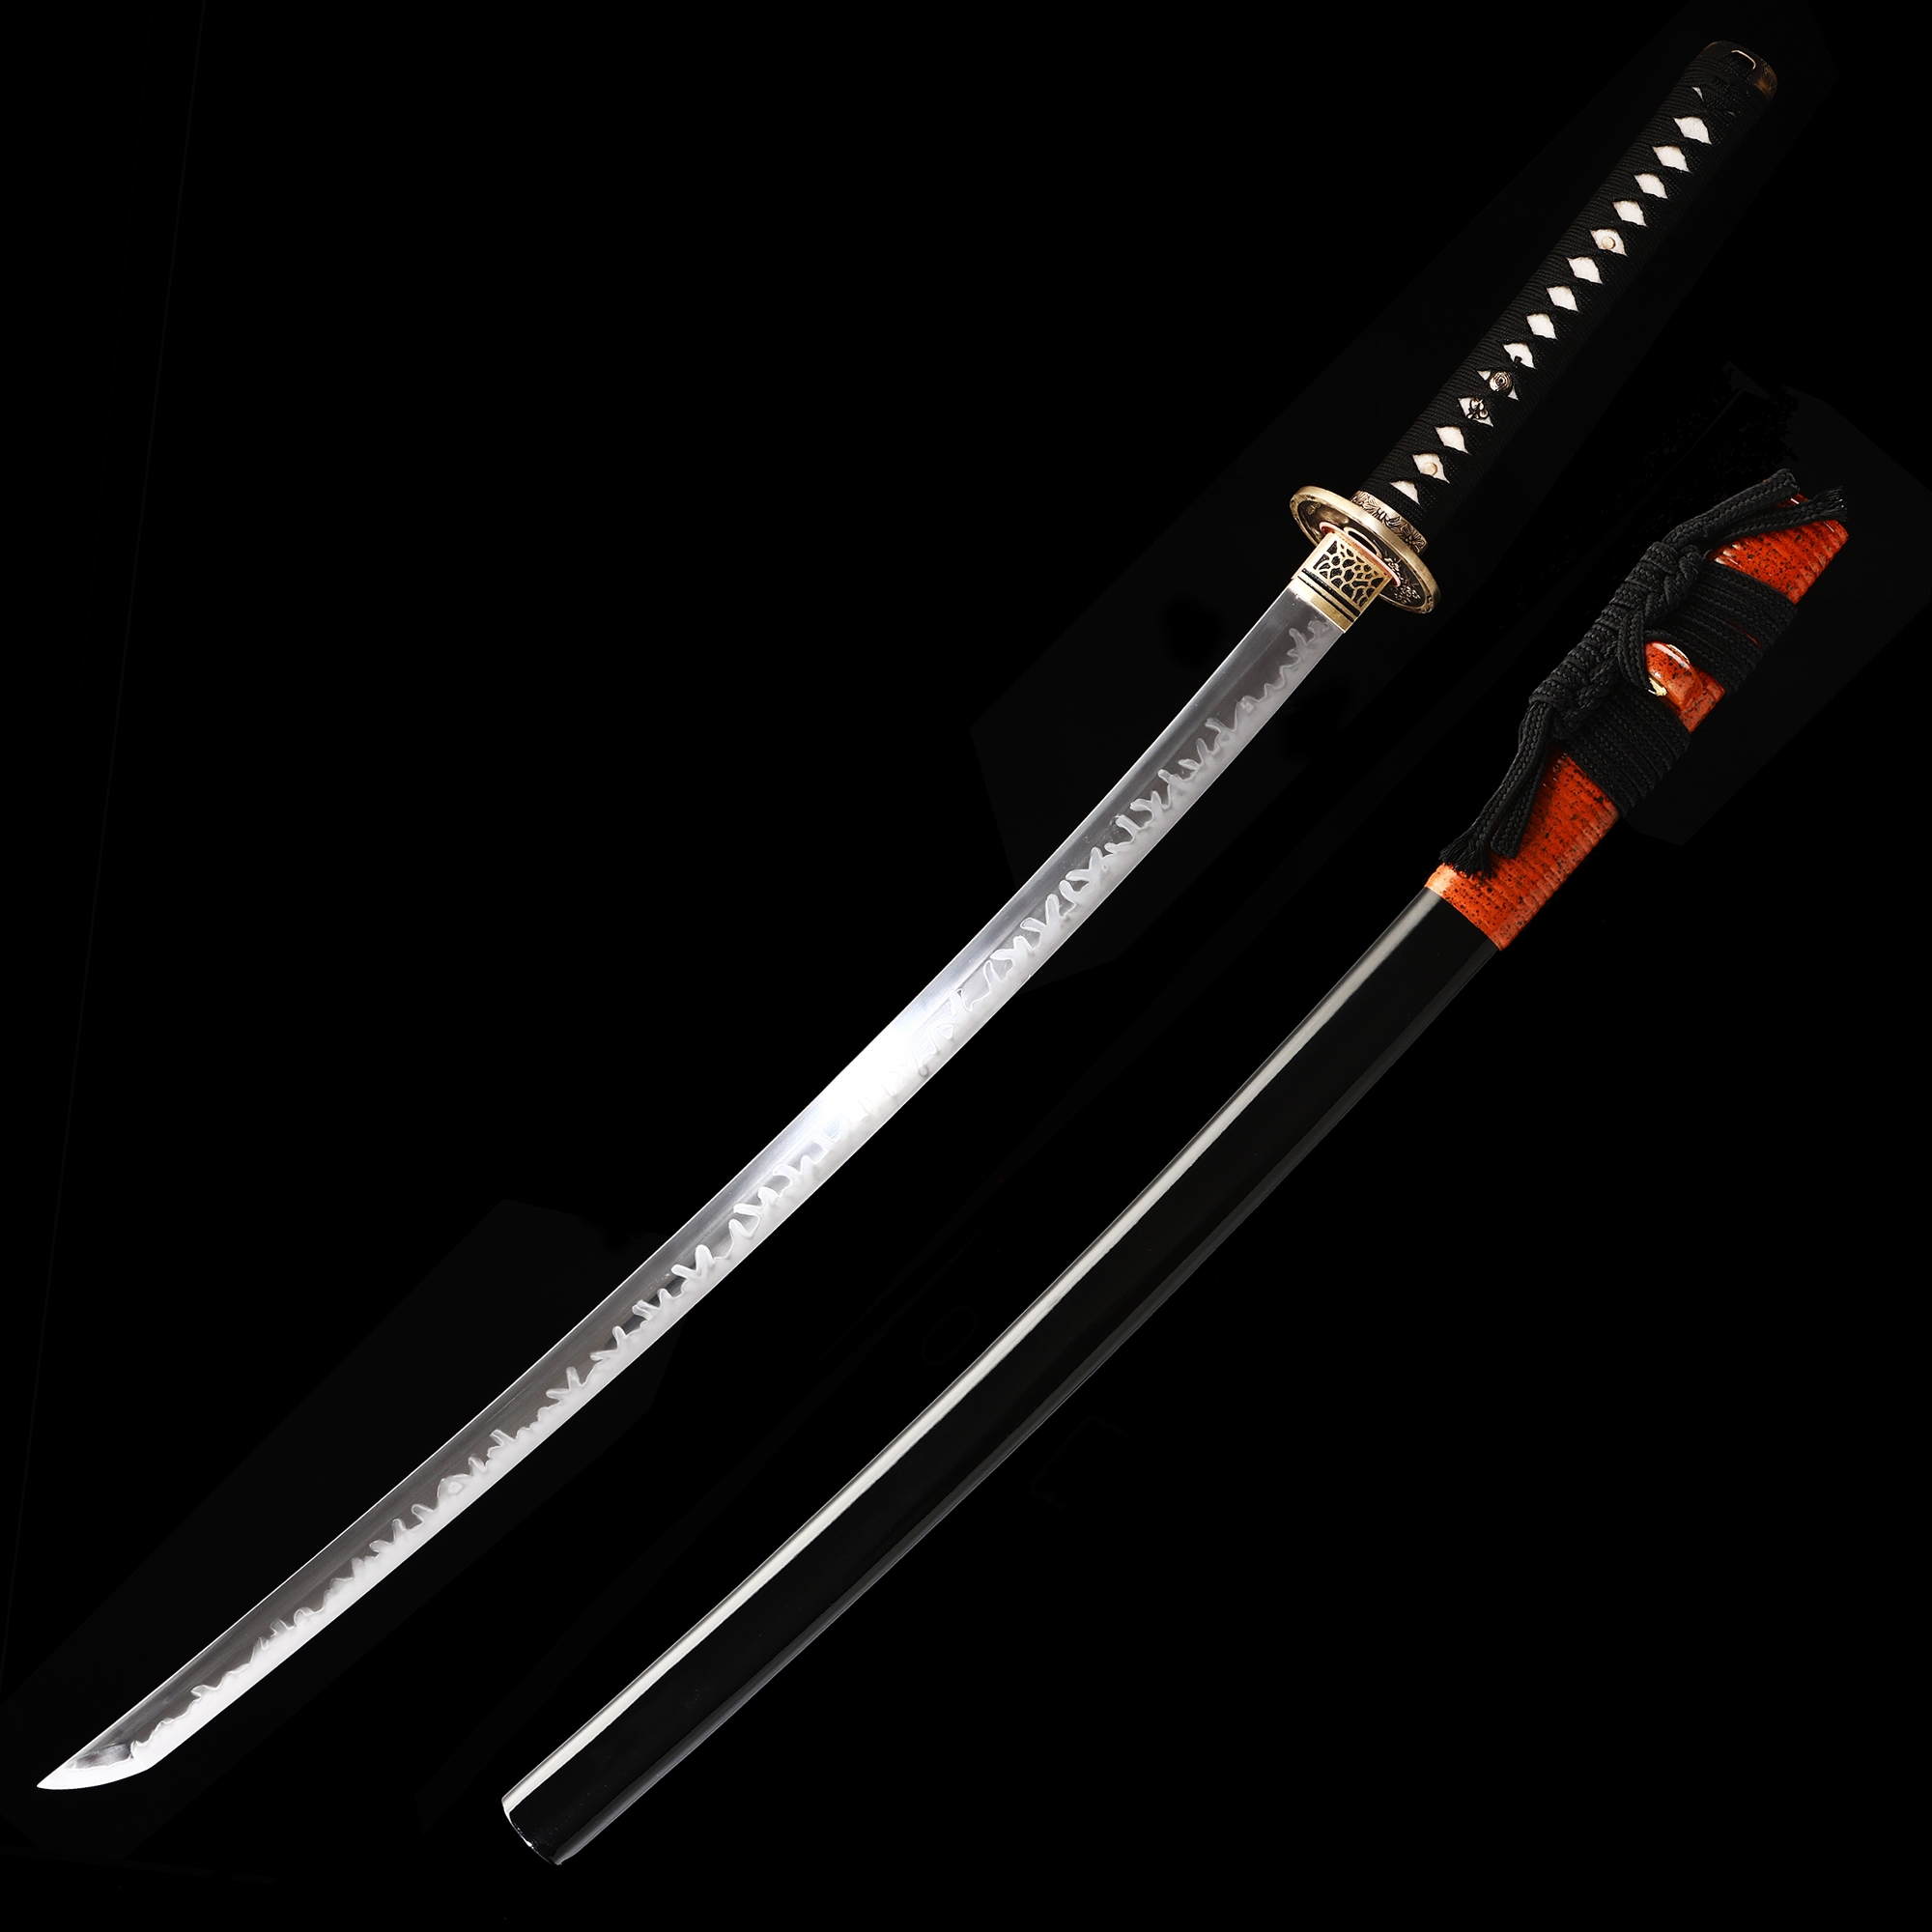 Transform your dull Katana into a razor sharp blade with the Tumbler R, sharpest knife